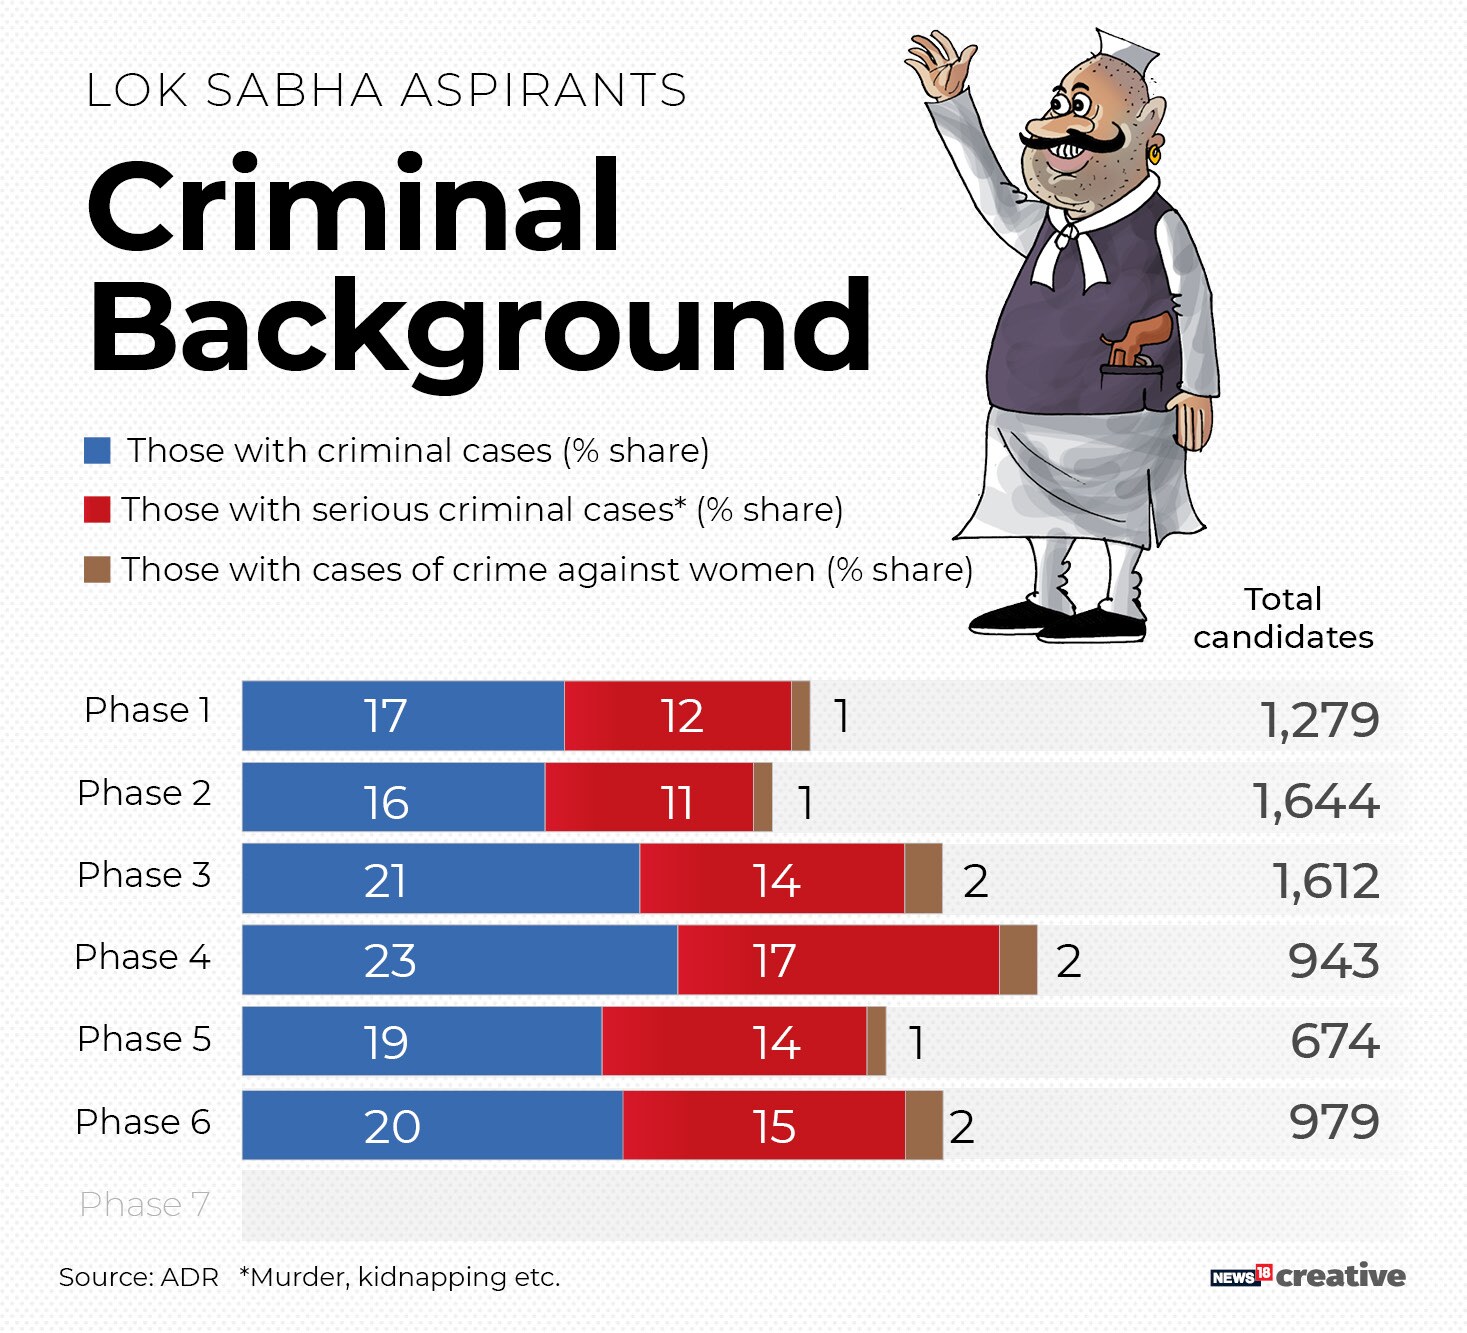 Lok Sabha criminal candidates